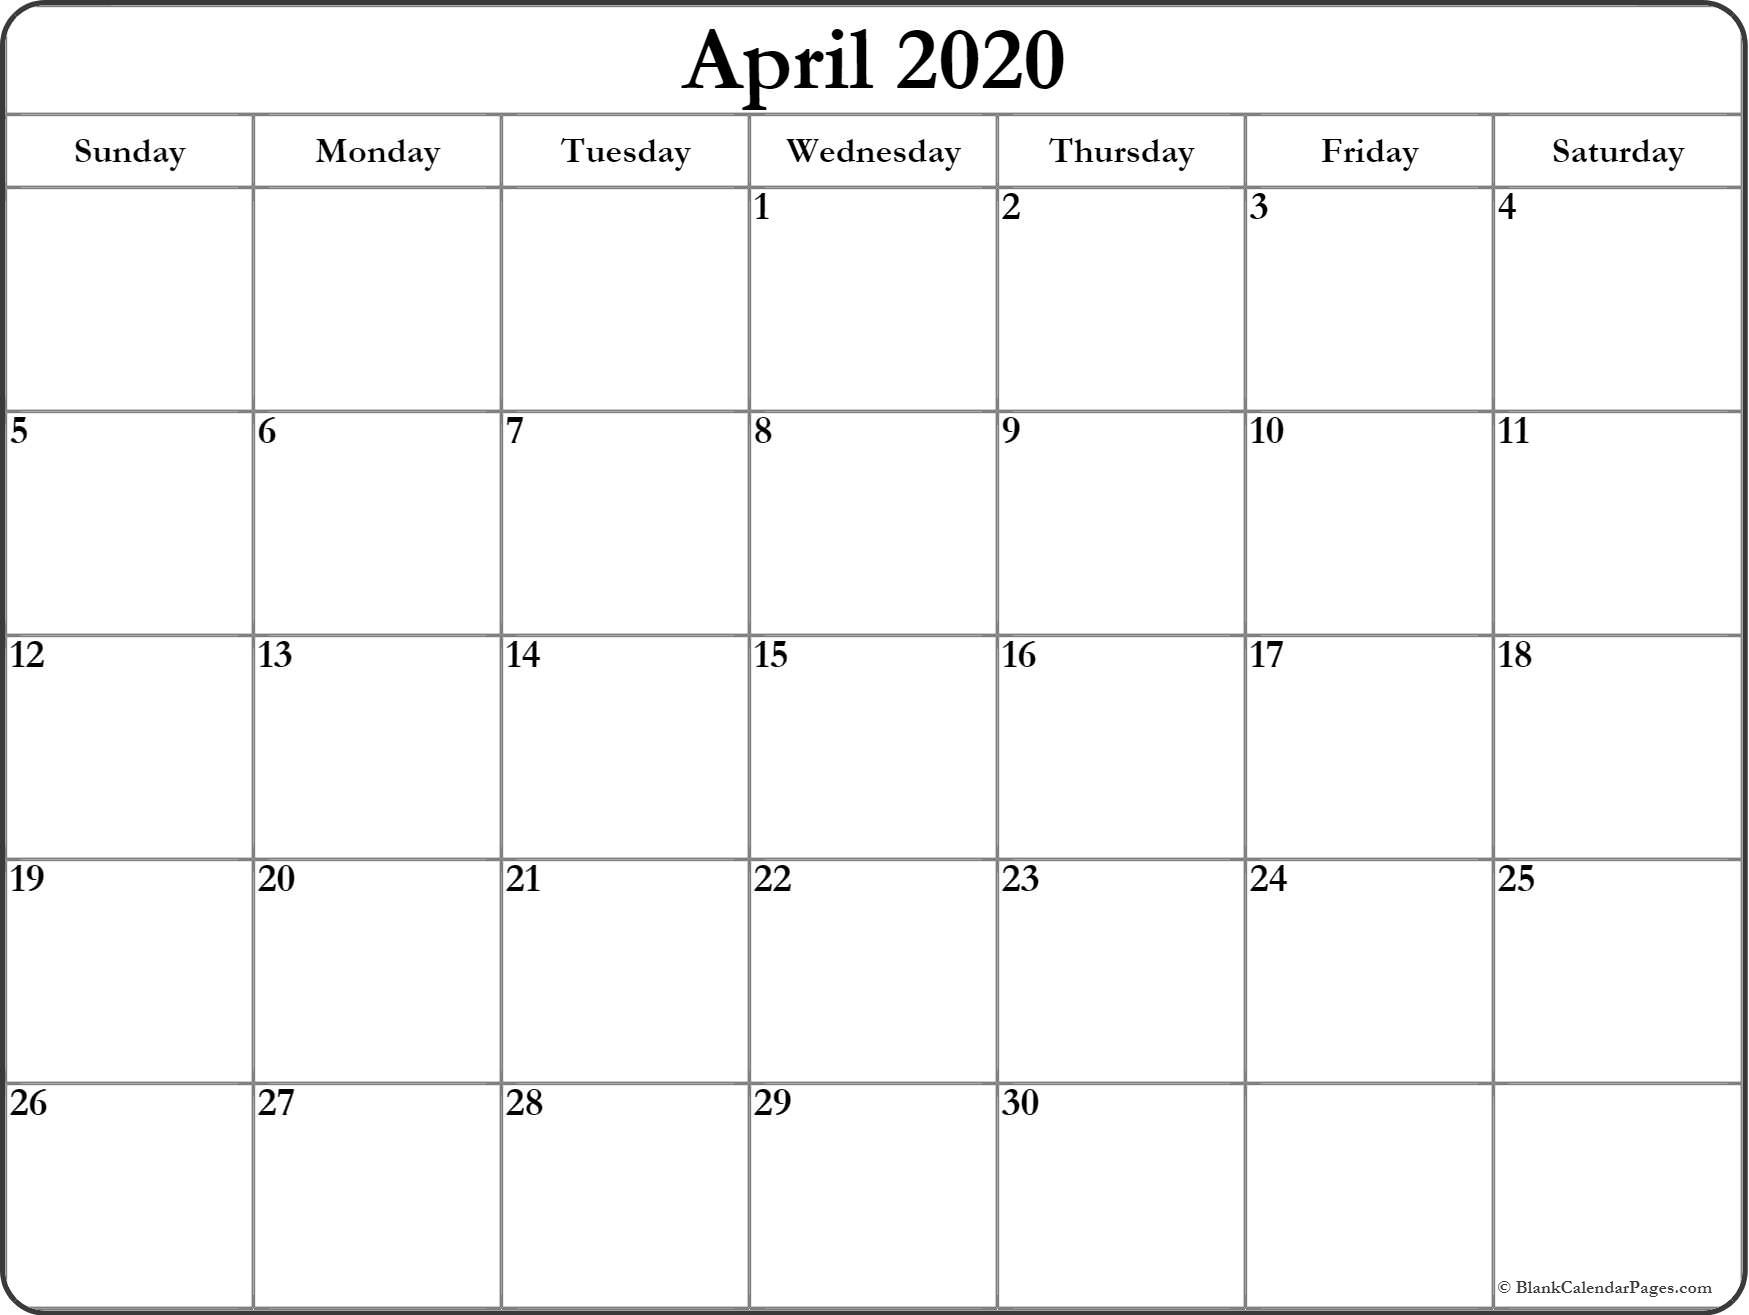 April 2020 Calendar | Free Printable Monthly Calendars-Fill In Calendar April 2020 Template